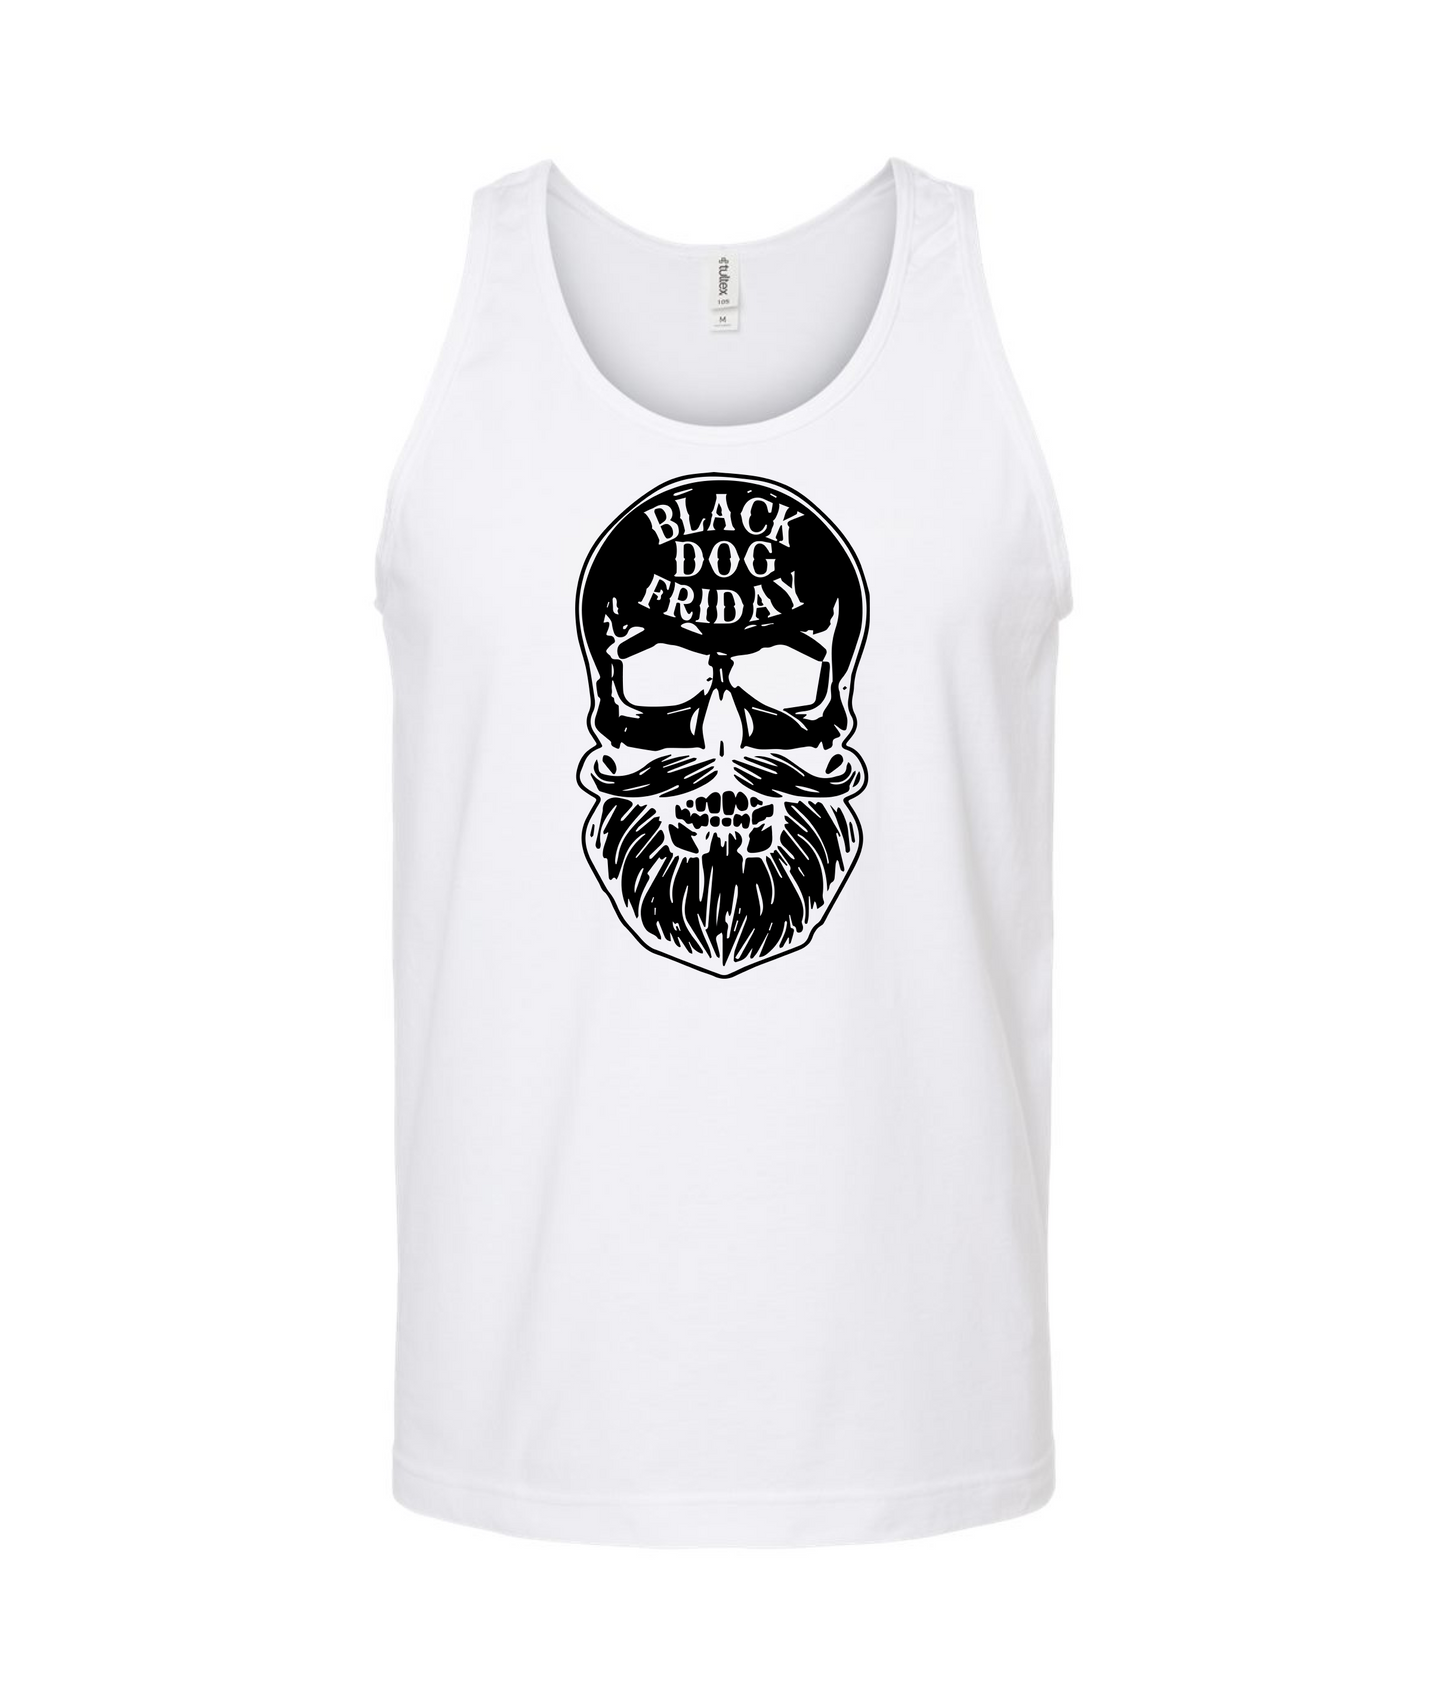 Black Dog Friday - Skull Logo - White Tank Top